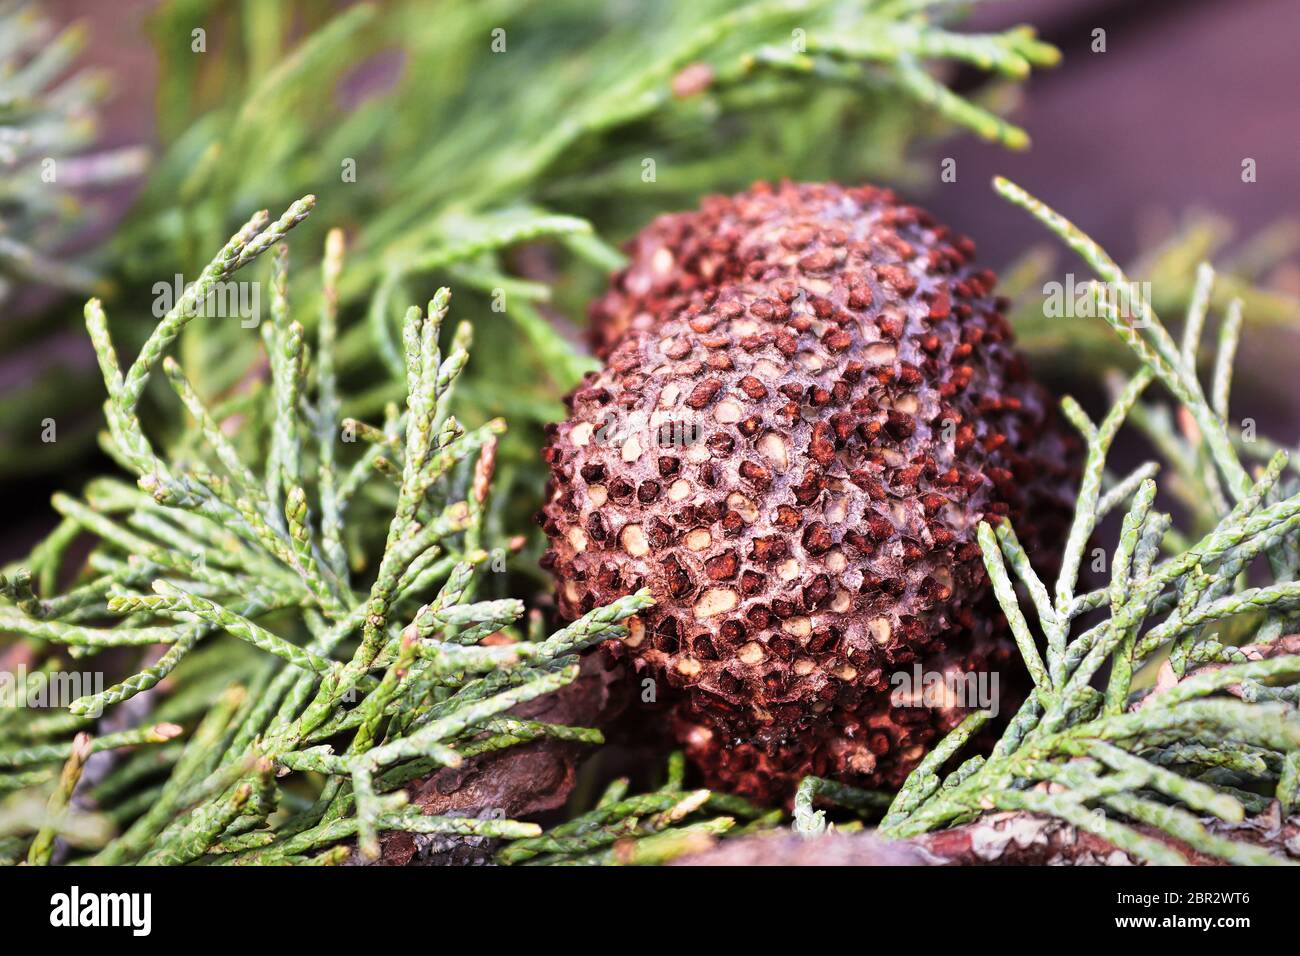 A gall of Juniper Hawthorn Rust on a branch of Juniper. Stock Photo